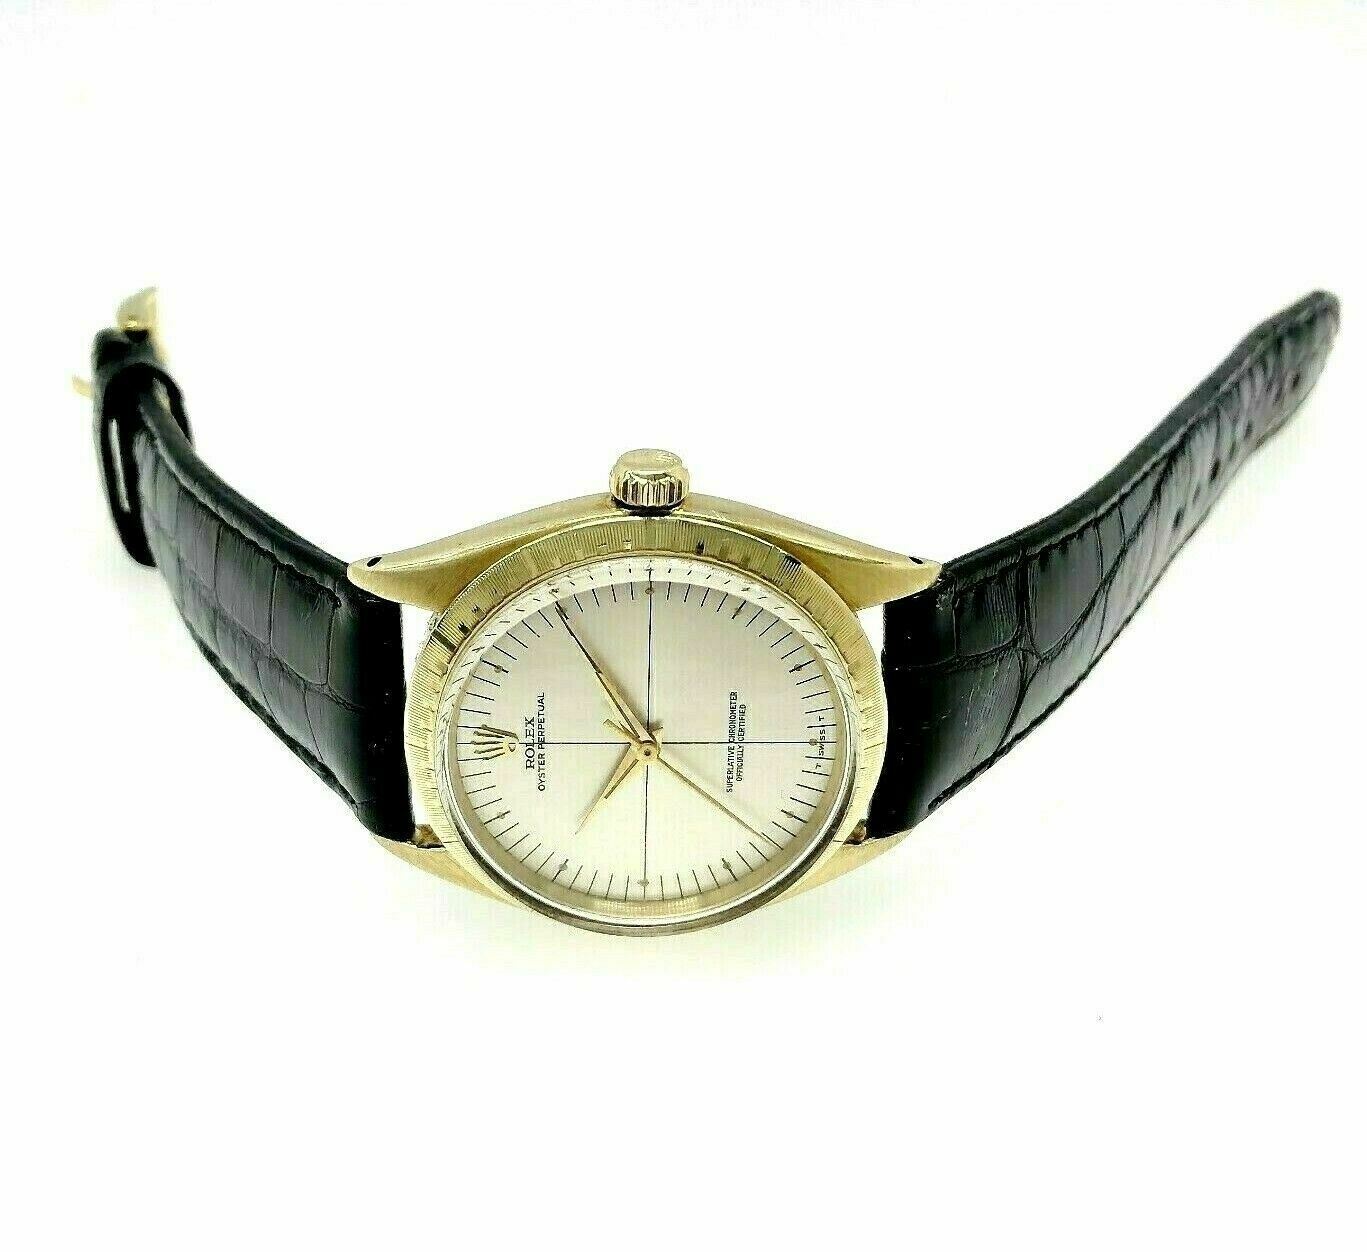 Rolex Oyster Zephyr Watch Solid 14 Karat Yellow Gold 34MM Ref 1008 Circa 1950's